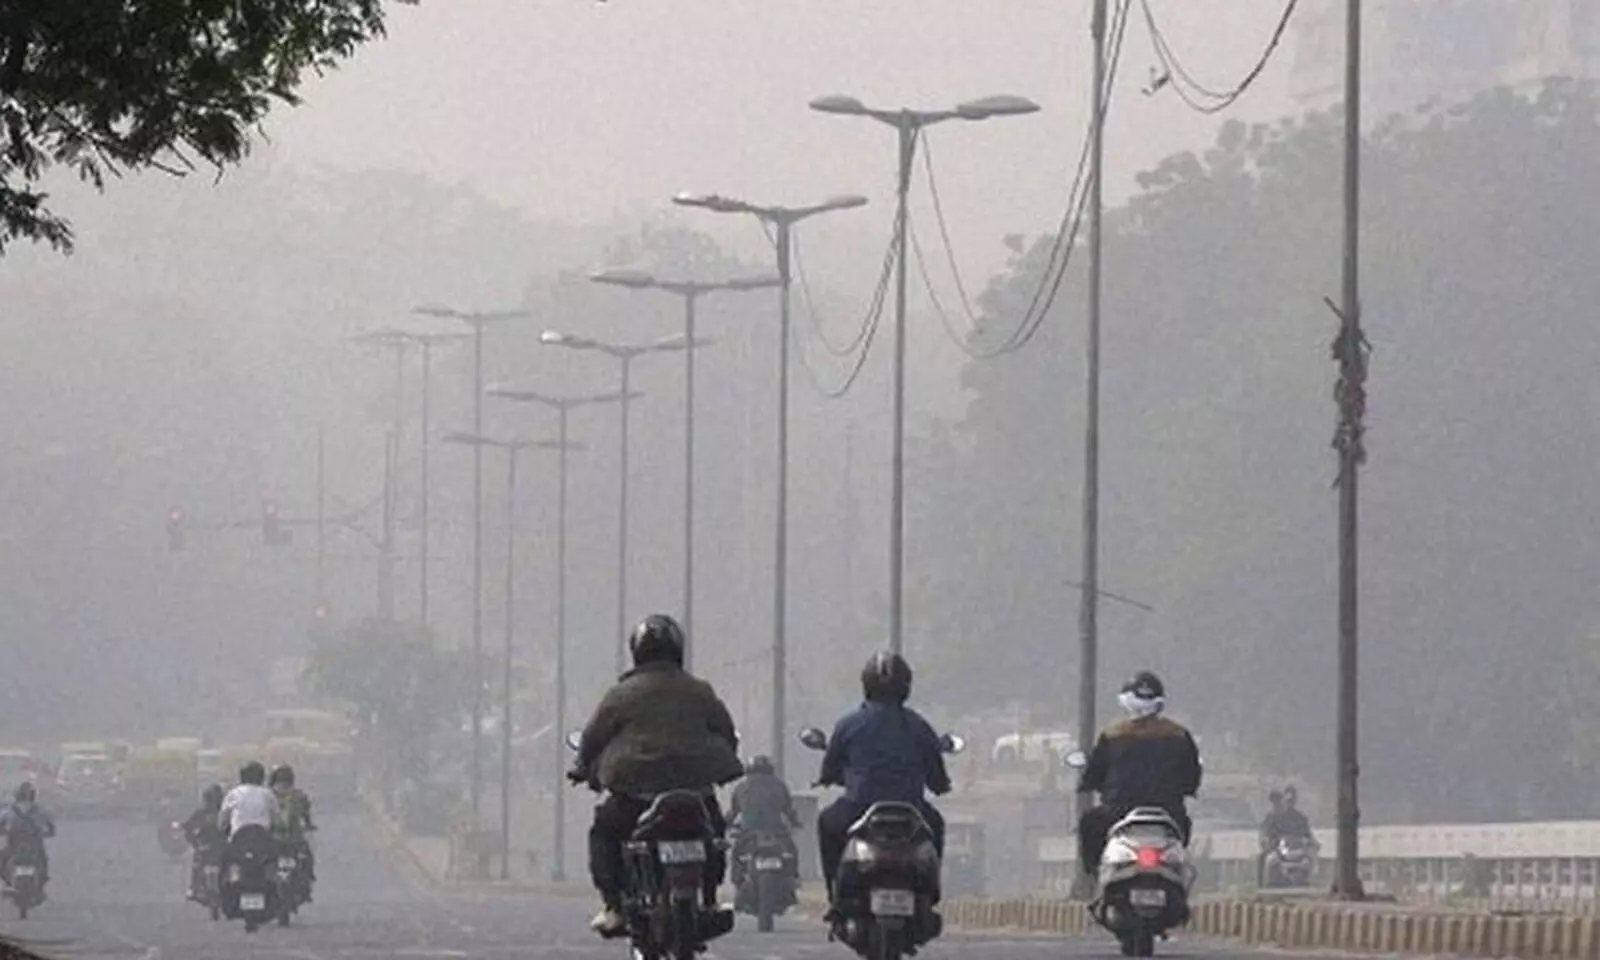 Delhi records minimum temperature of 8.3 degree C, rain likely during day